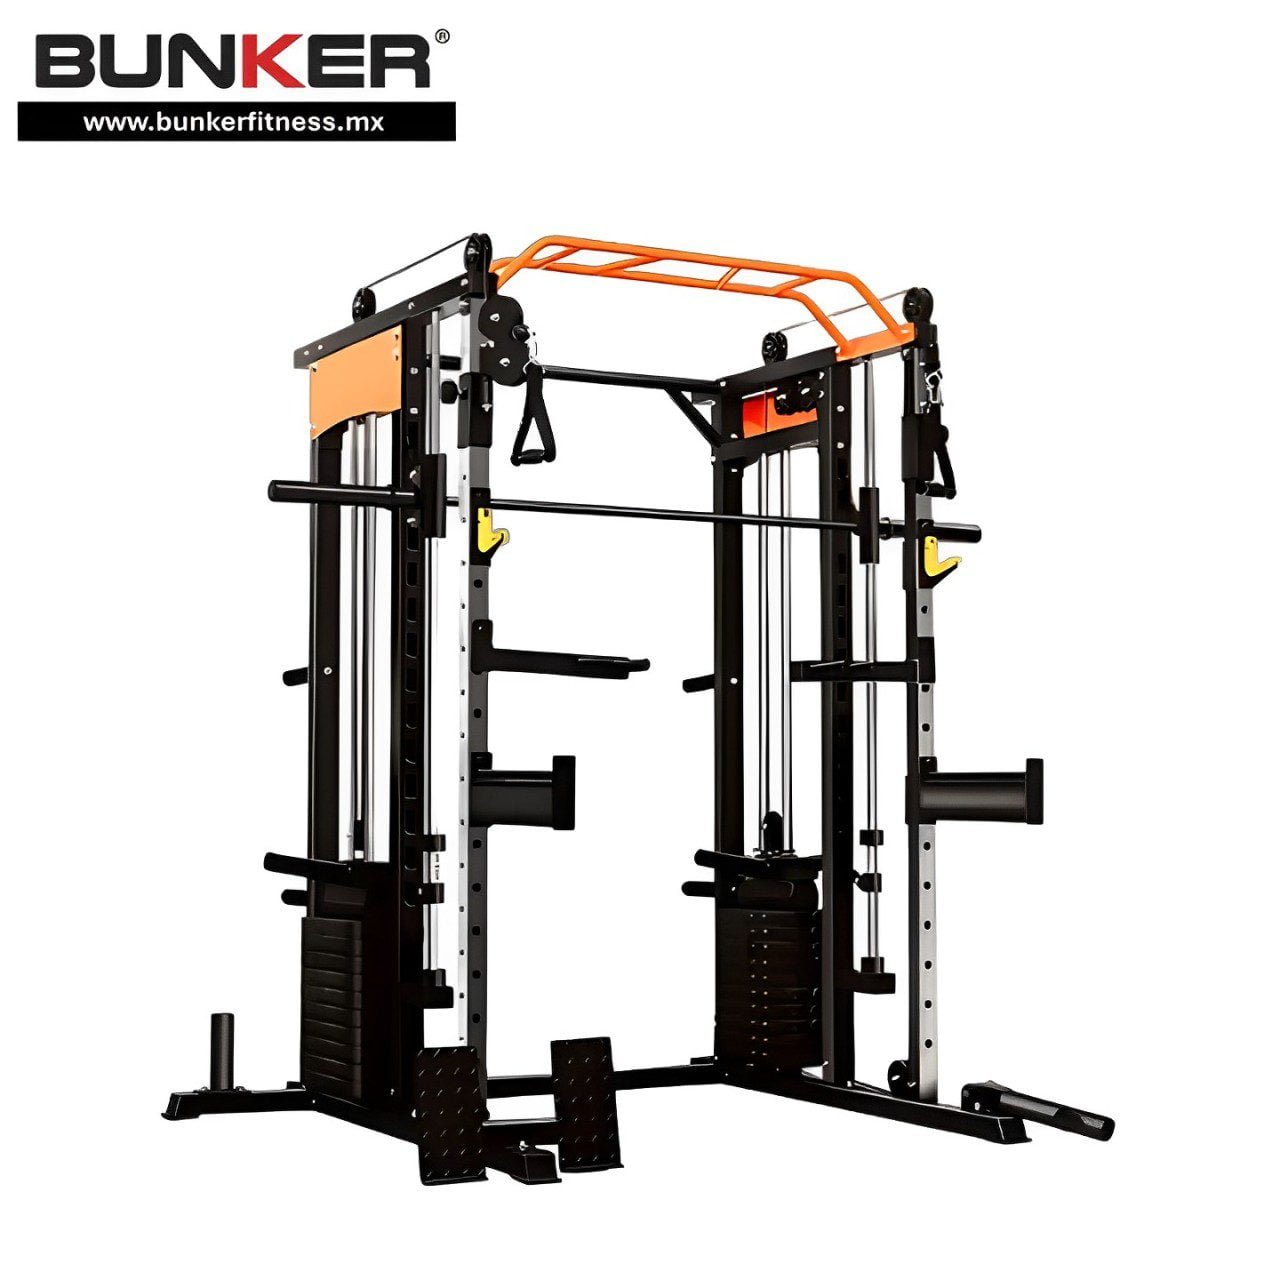 gimnasio multifuncional para ejercicio jaula smith machine bunker gym bunker fitness